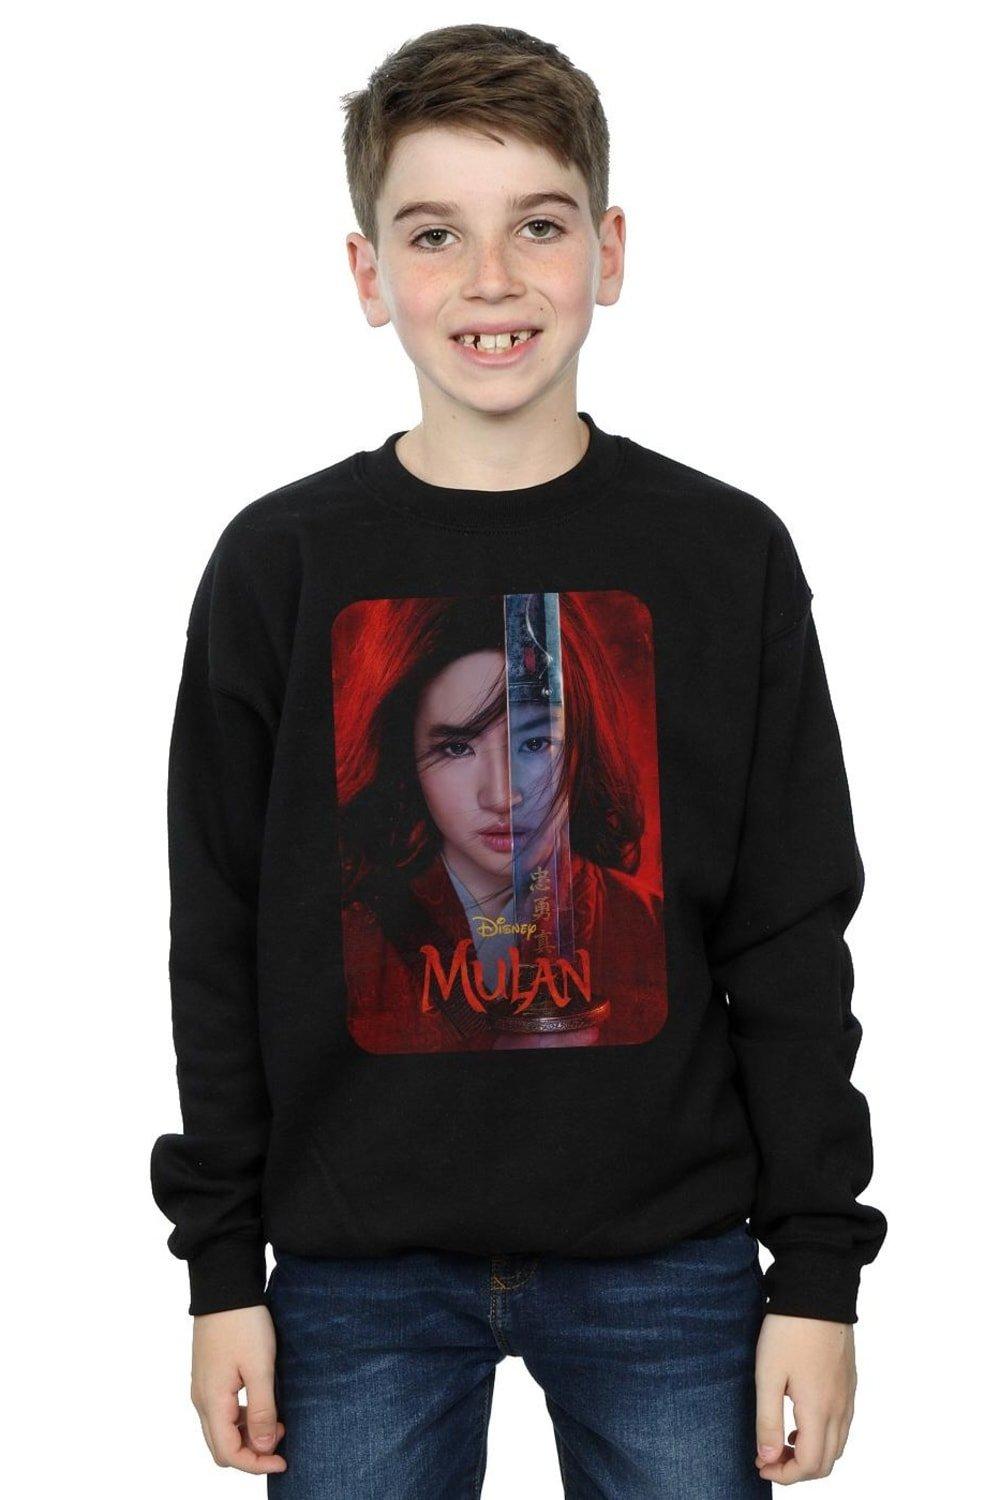 Mulan Movie Poster Sweatshirt